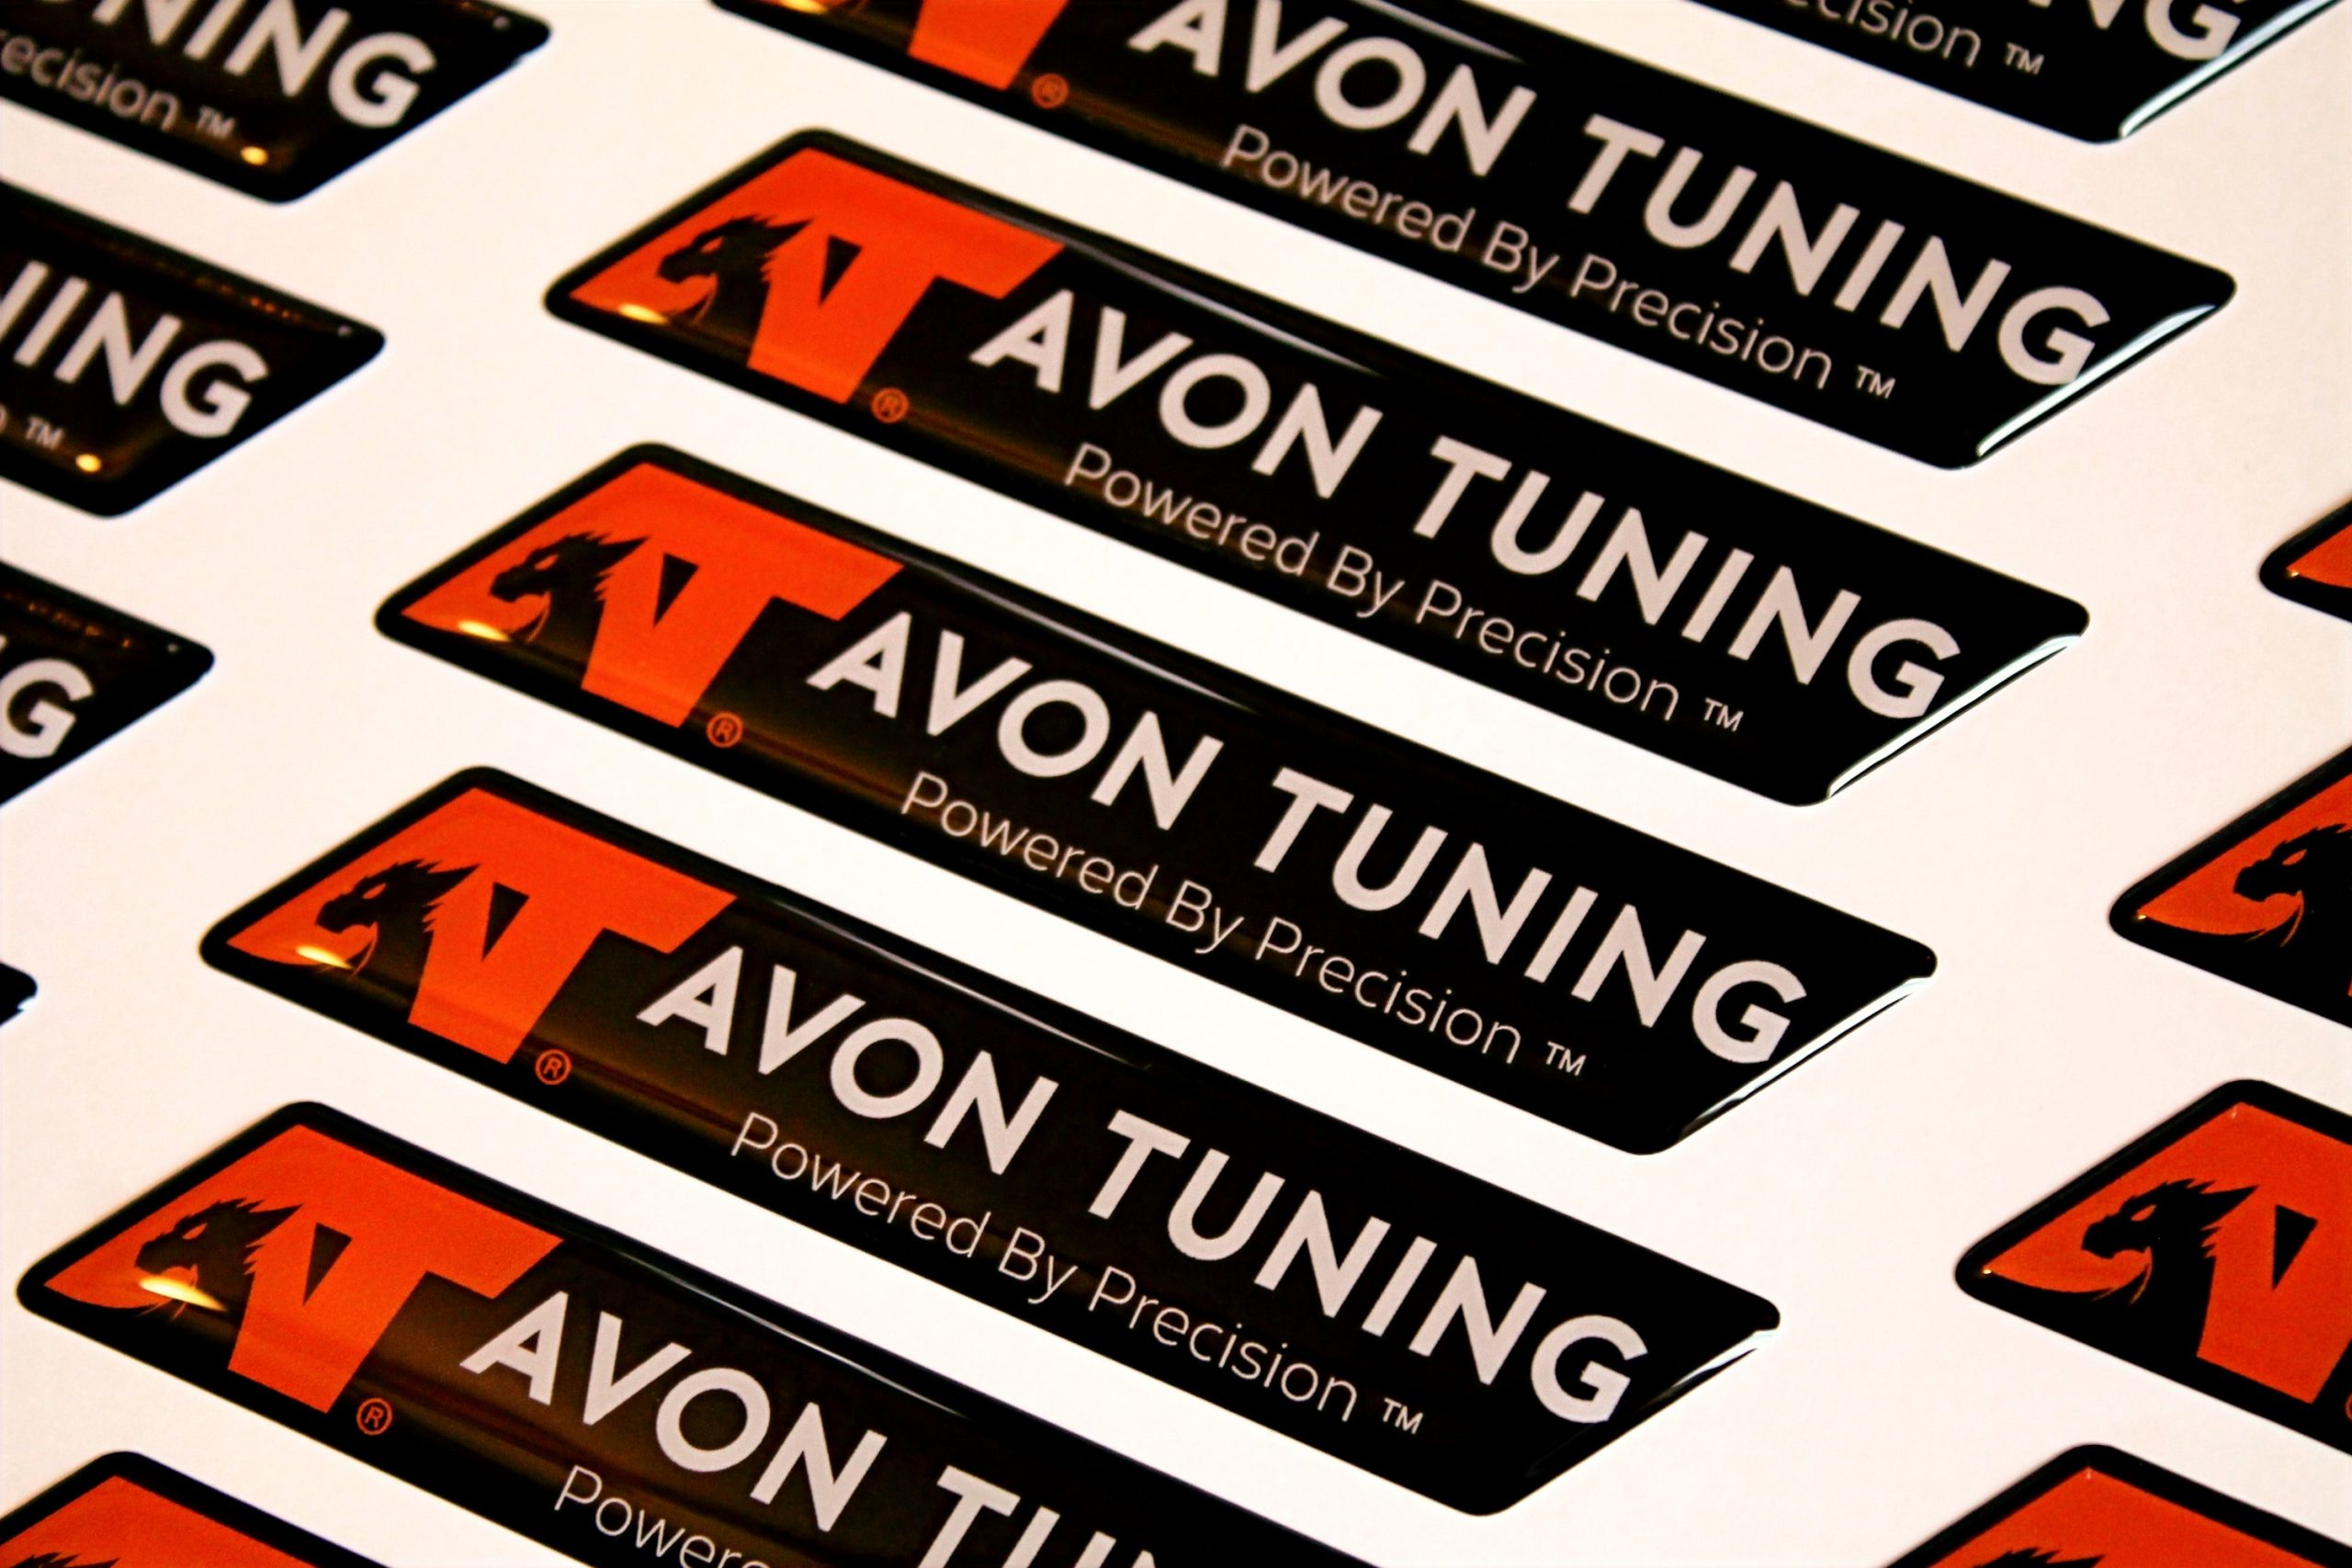 Avon Tuning